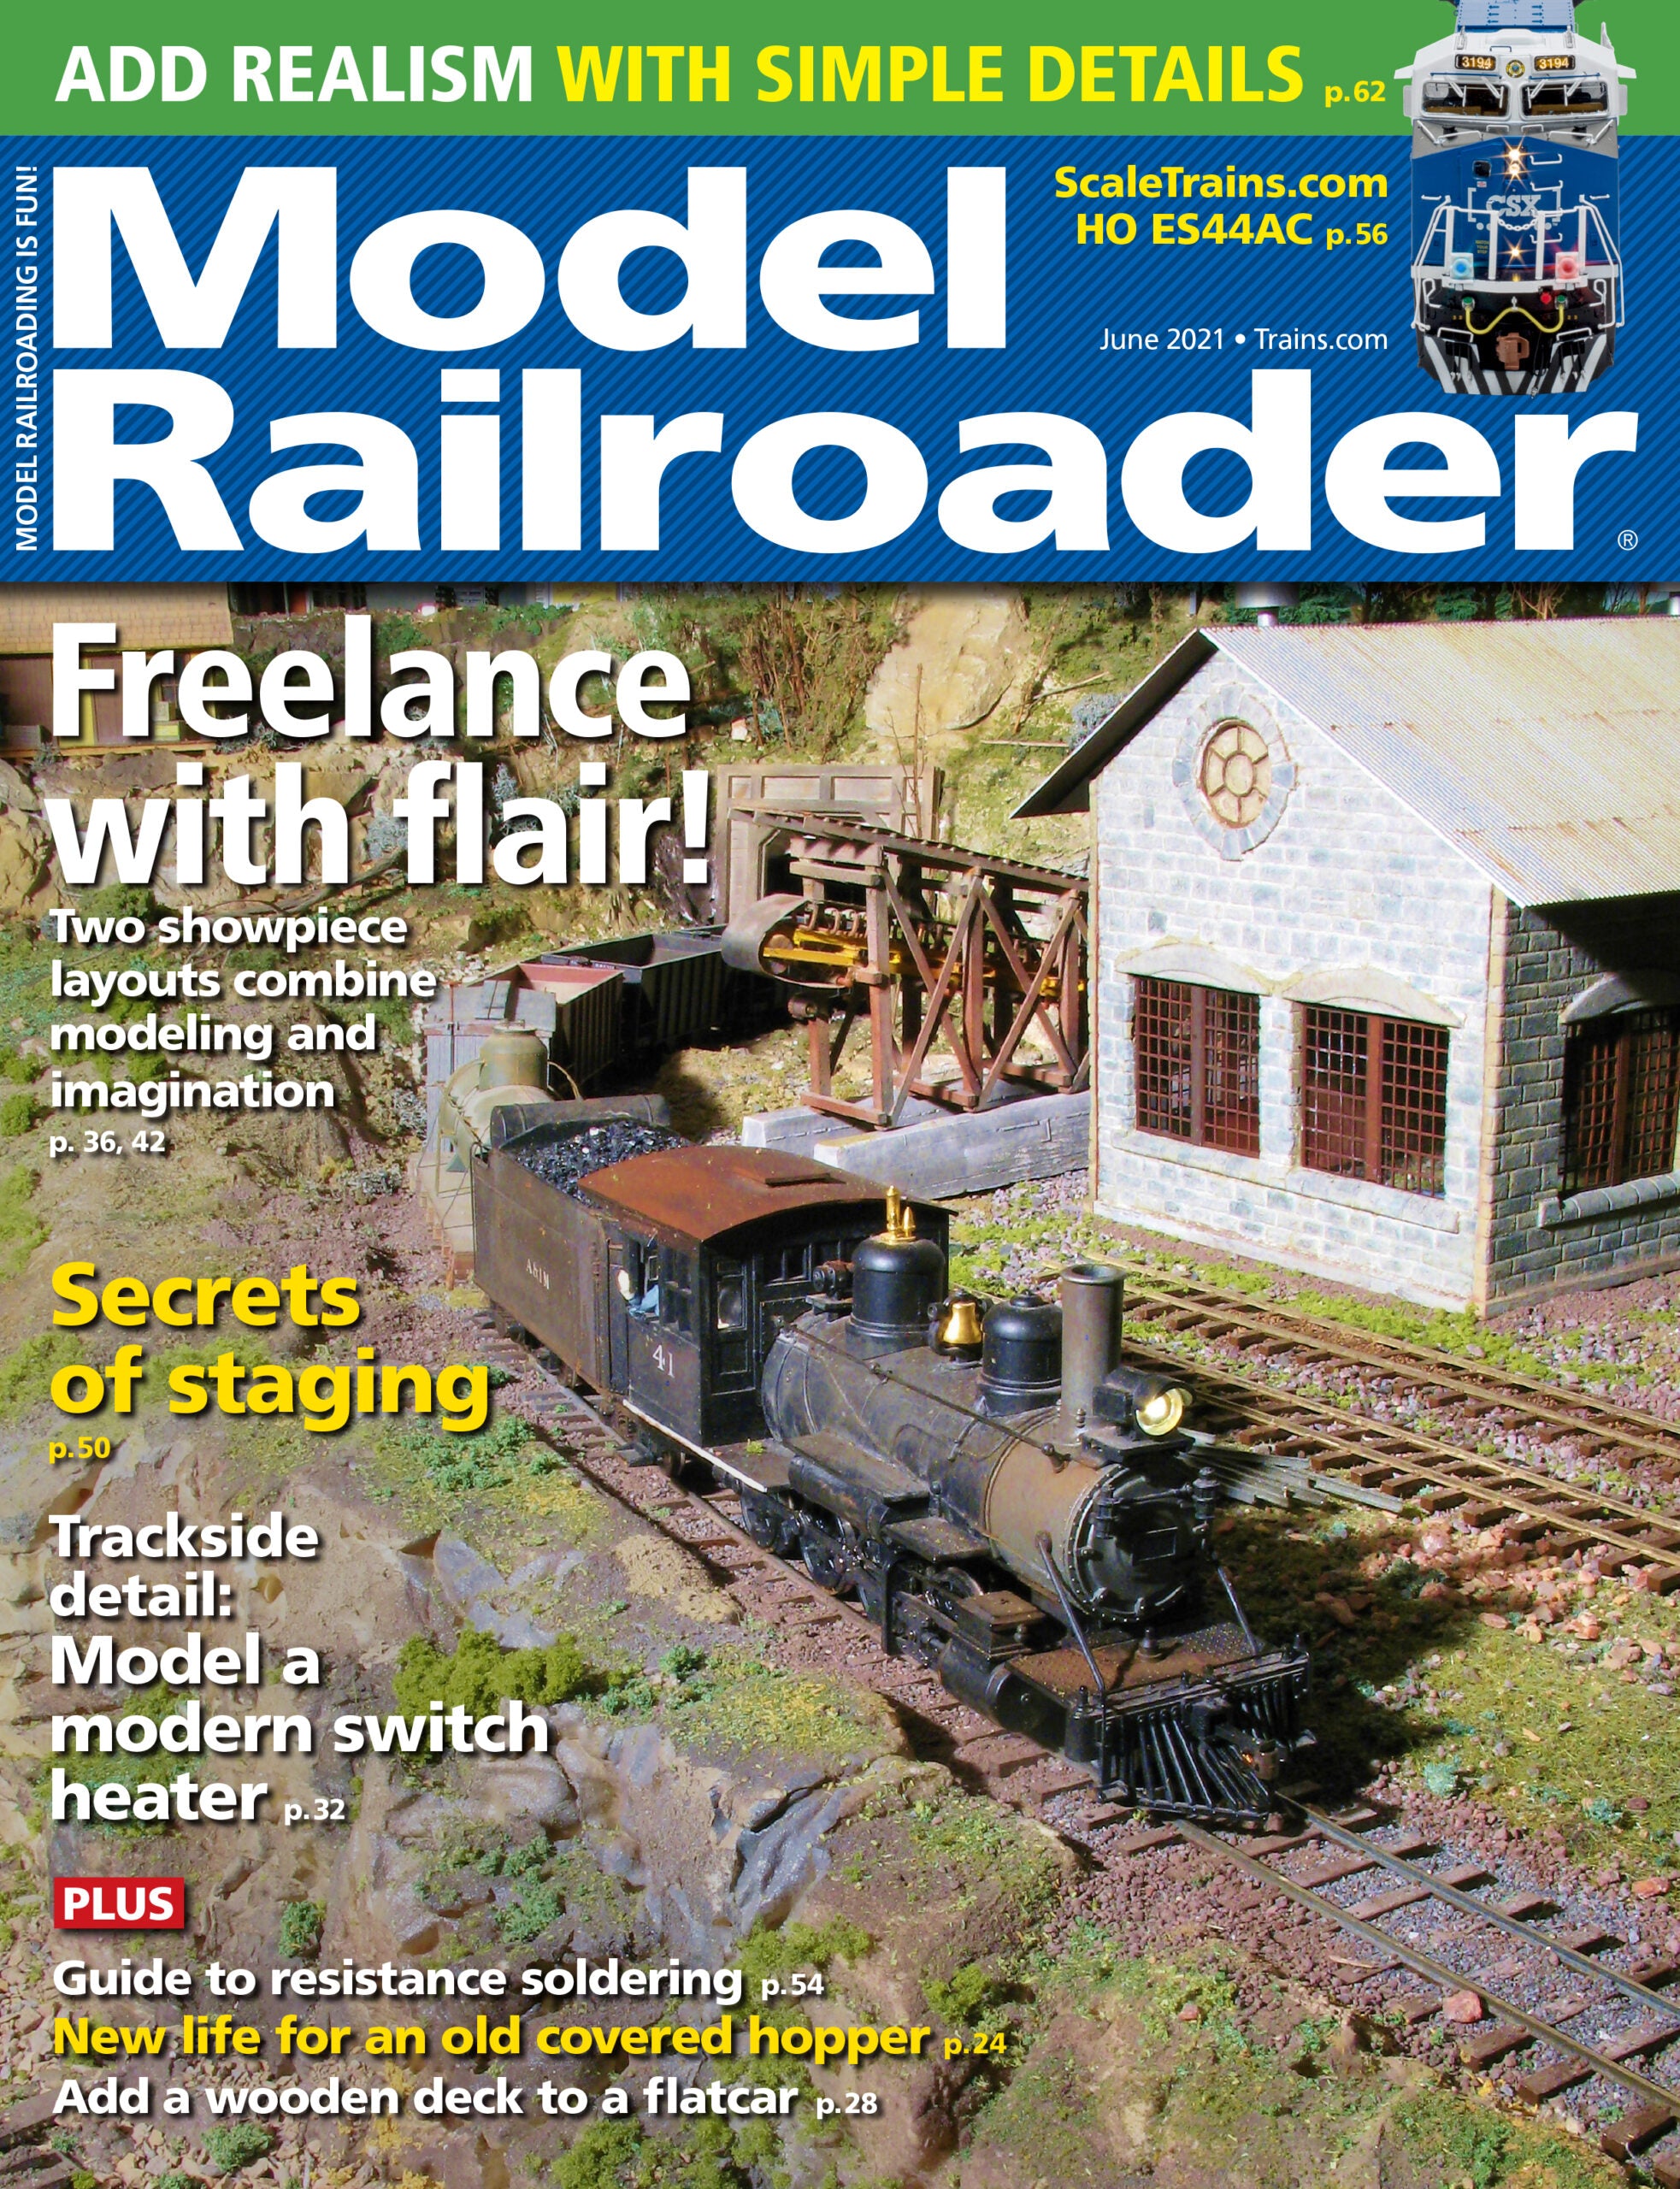 Model Railroader - Magazine - Vol. 88 - Issue 06 - June 2021